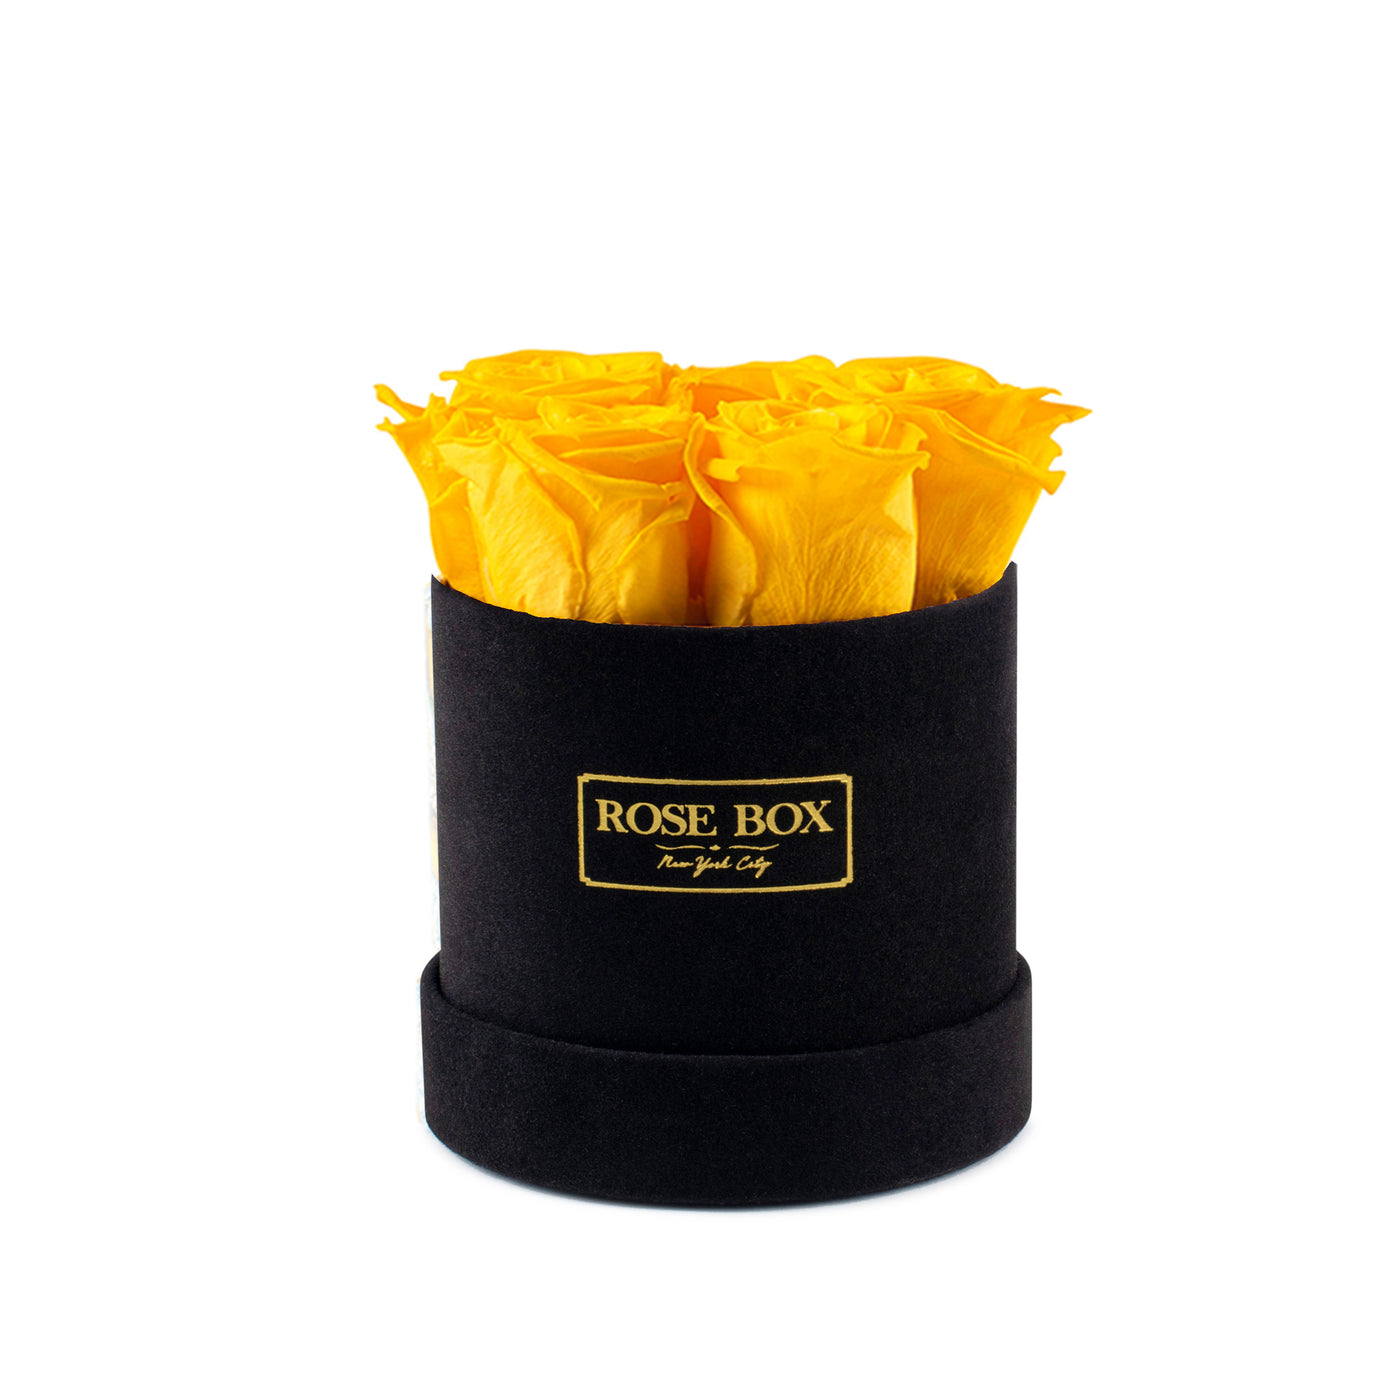 Mini Black Box with Bright Yellow Roses